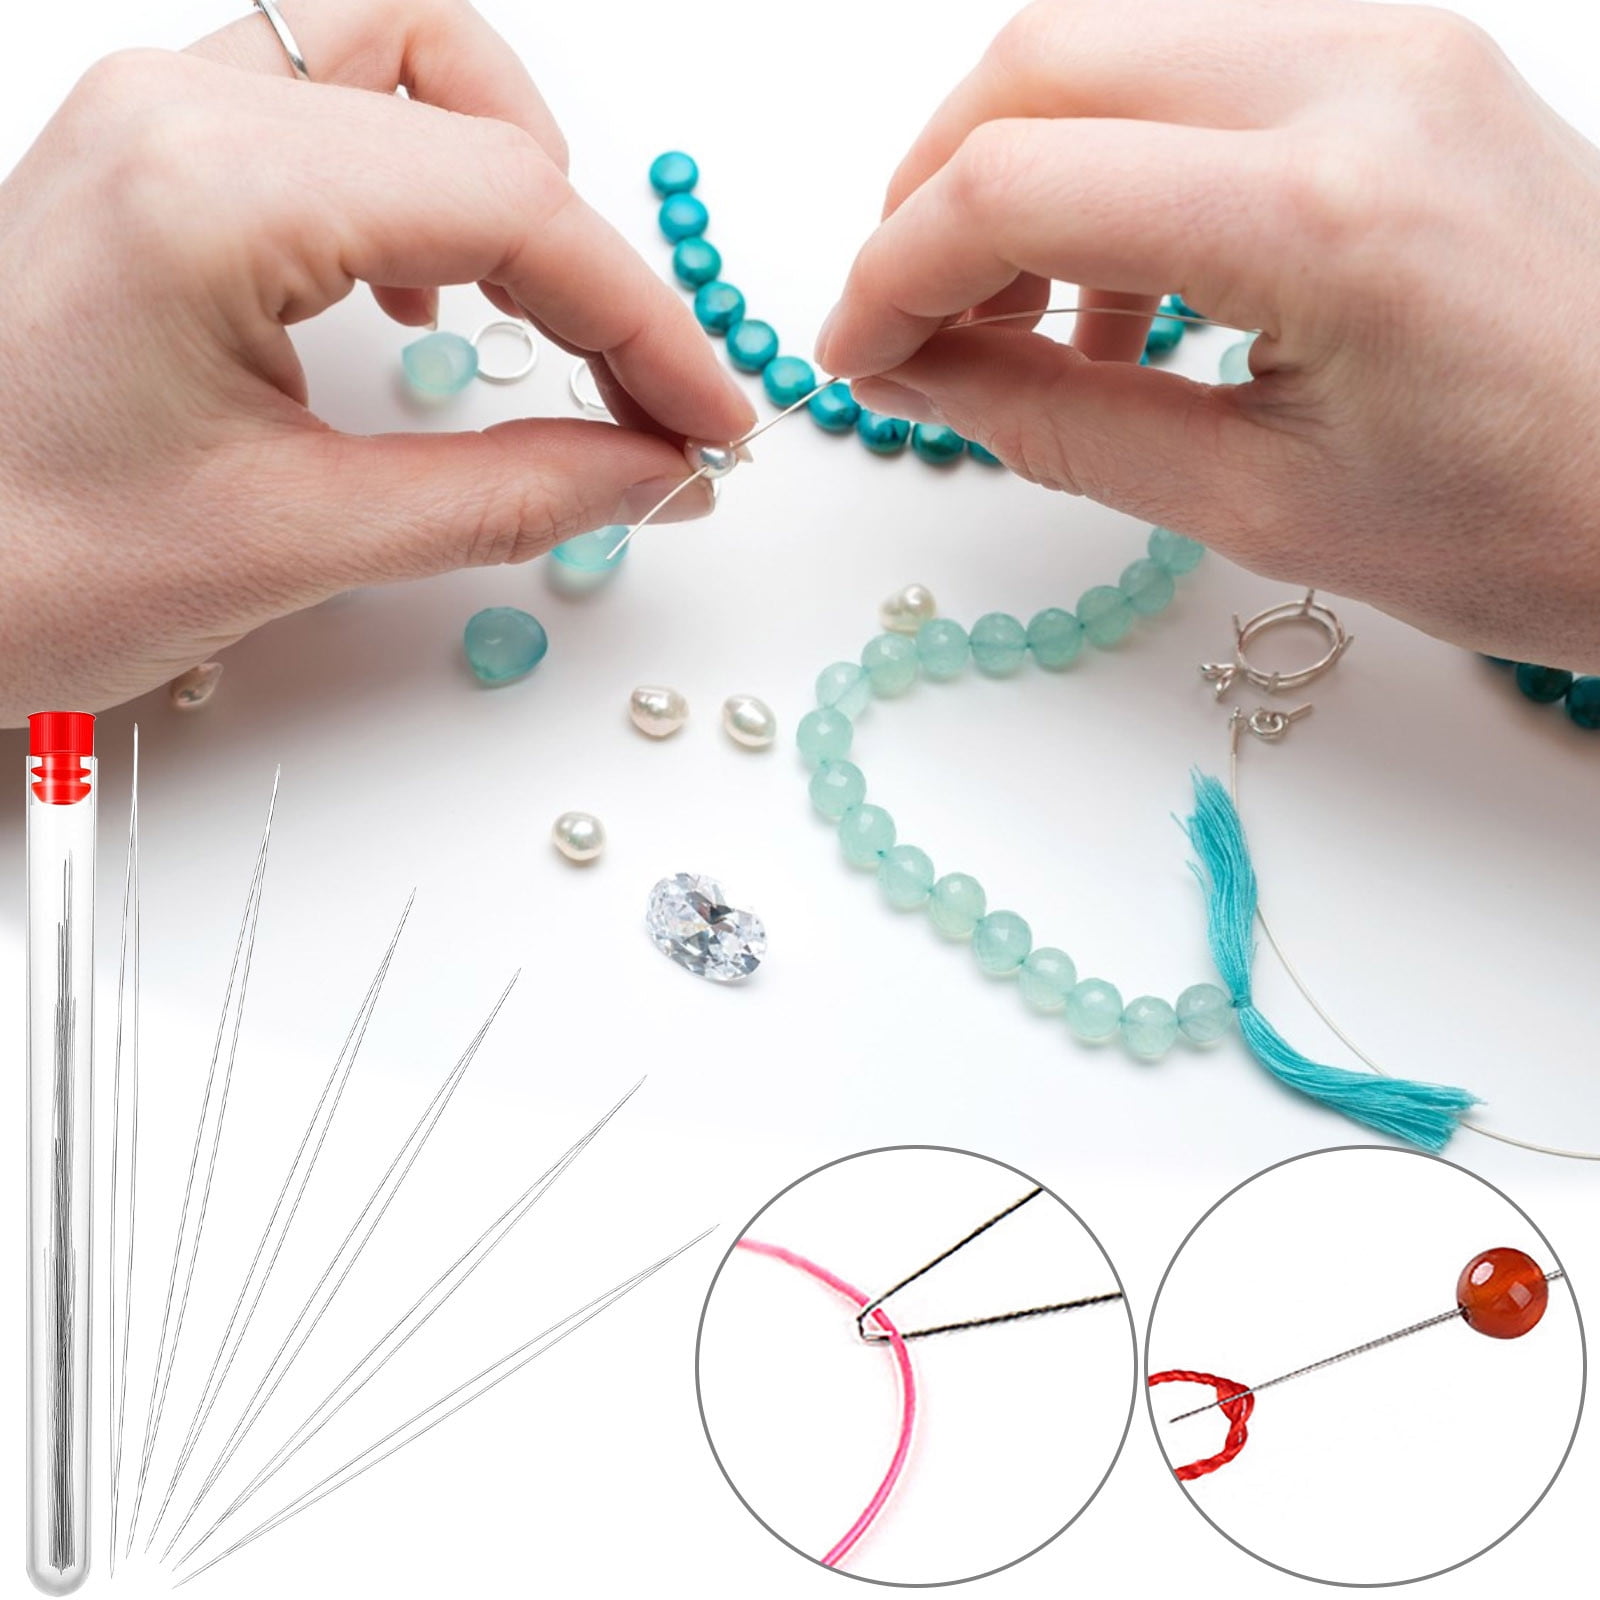 Bead Spinner for Jewelry Making, Effortless Rotating Wooden Bracelet  Spinner with 50 Letter Beads, 3000 Seed Beads, 2 Big Eye Beading Needles  for